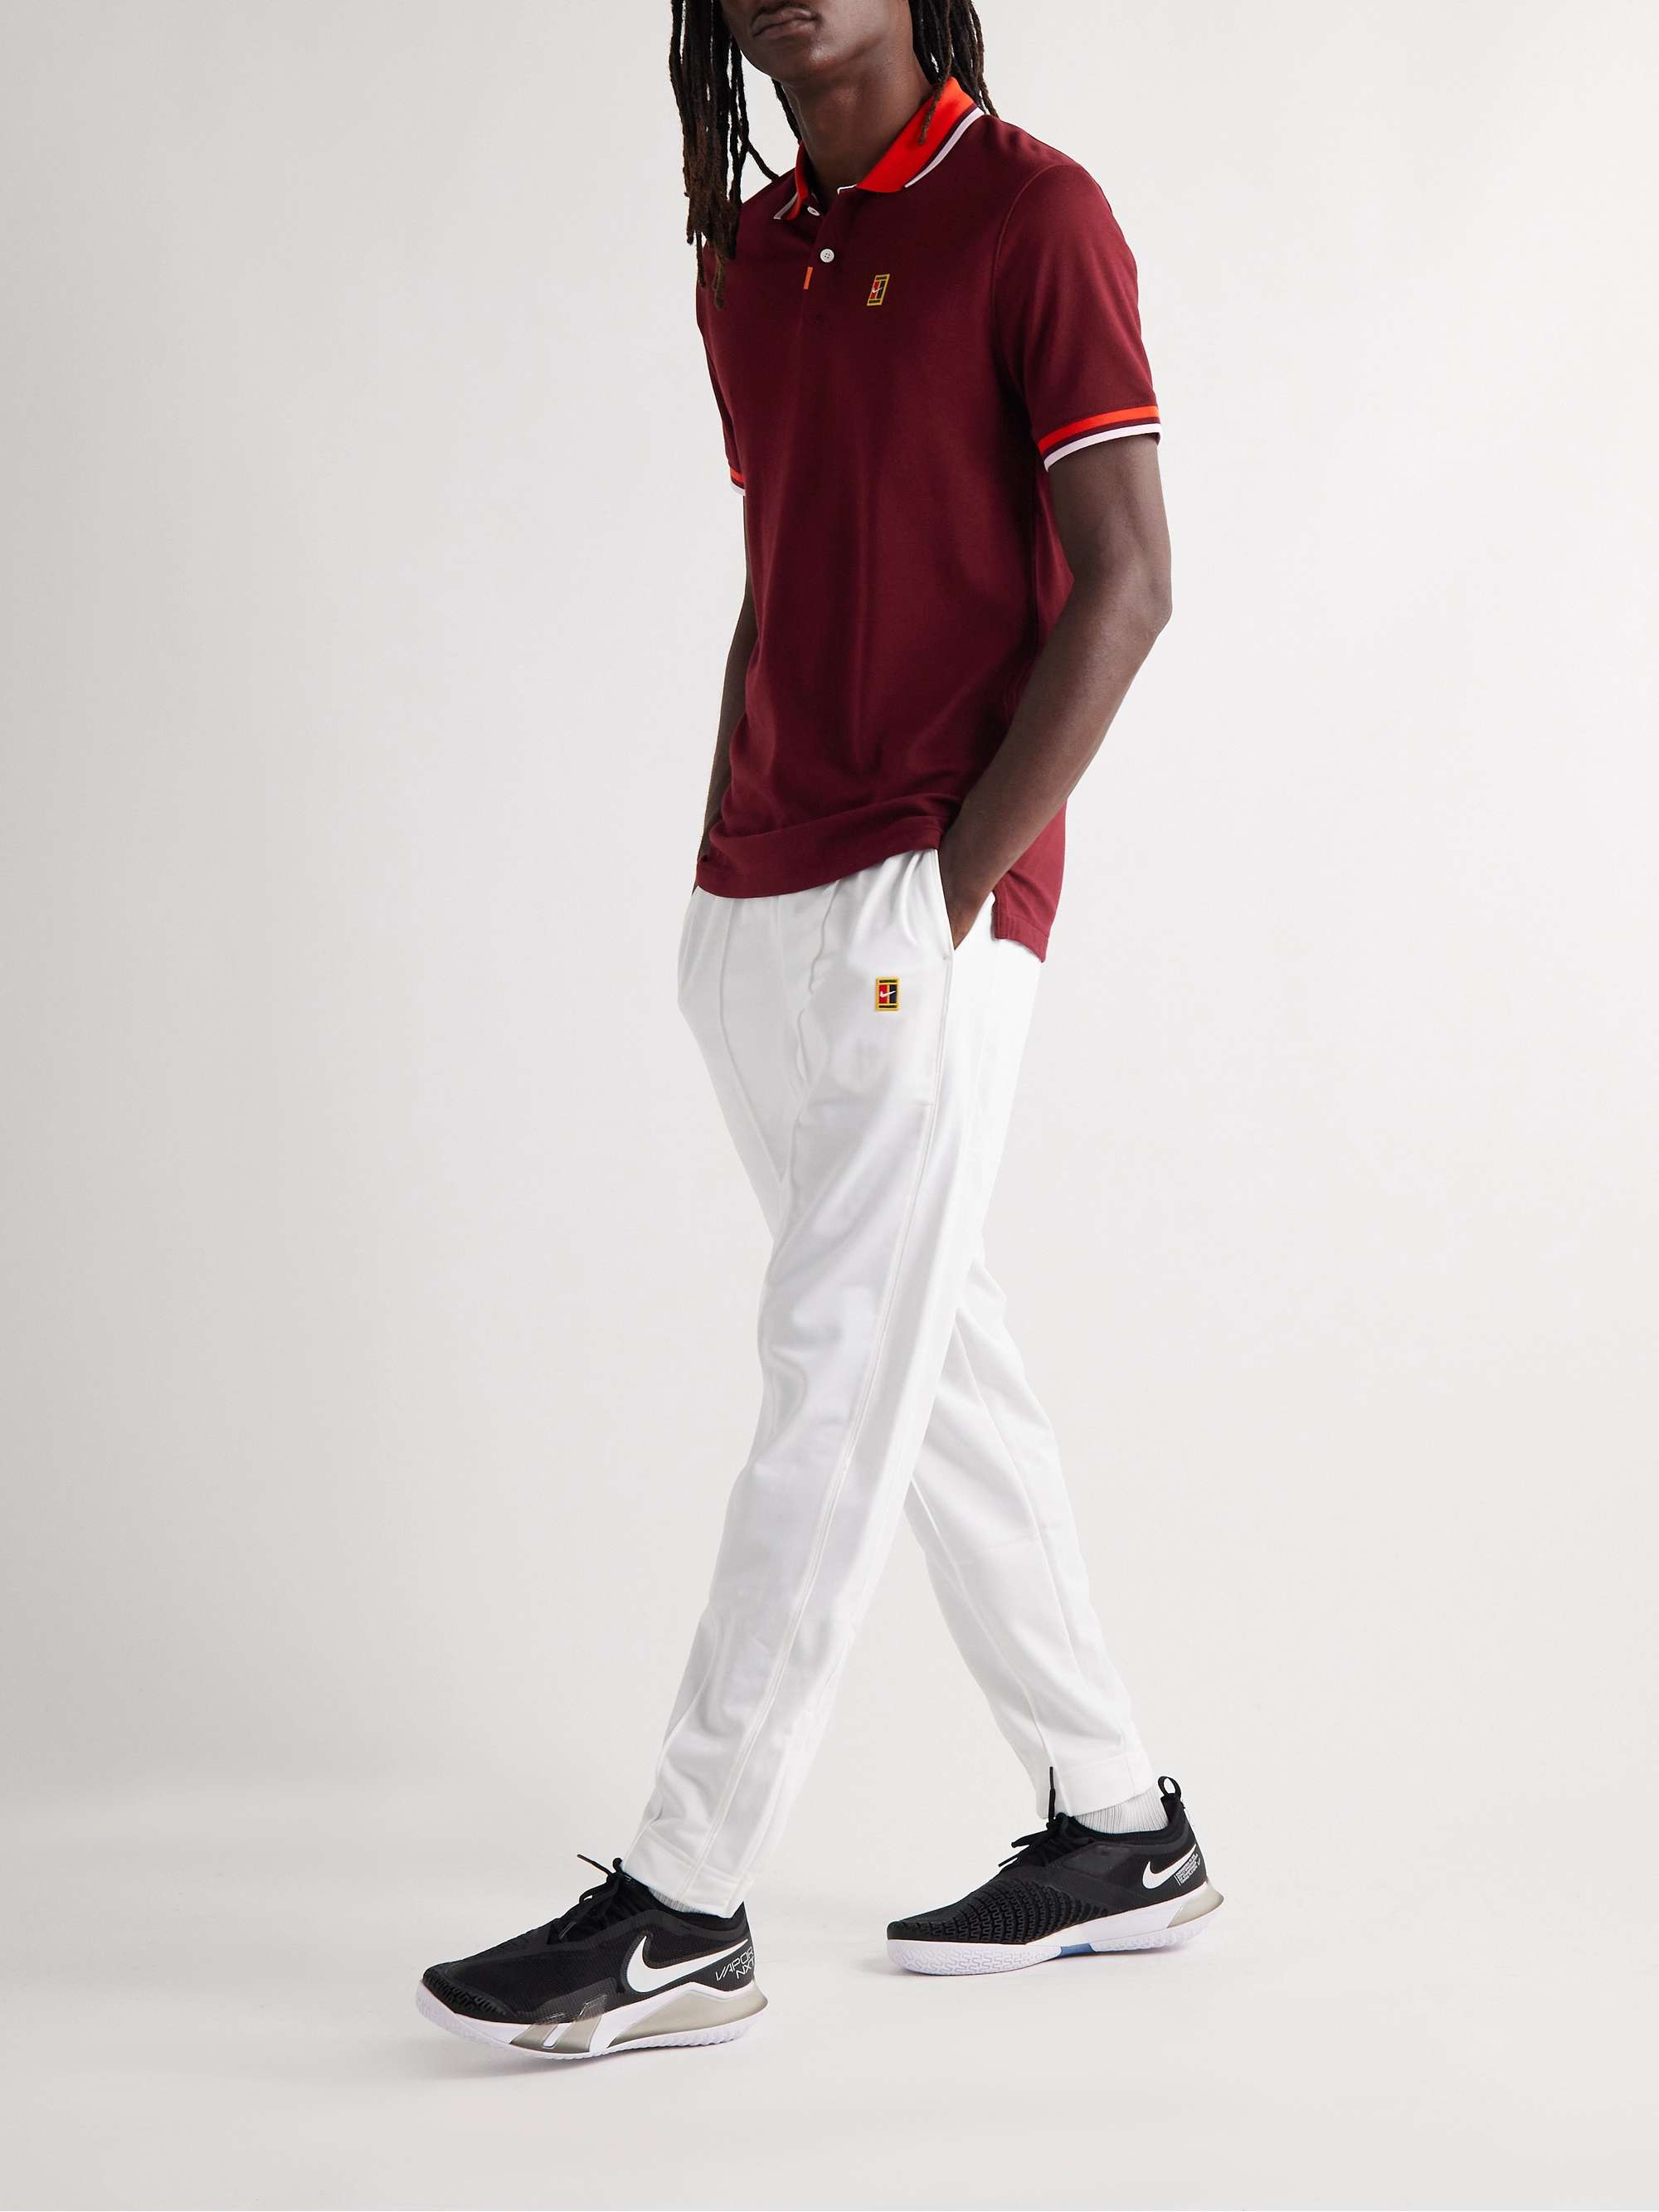 Red Slim-Fit Colour-Block Dri-FIT Piqué Tennis Polo Shirt | NIKE TENNIS |  MR PORTER